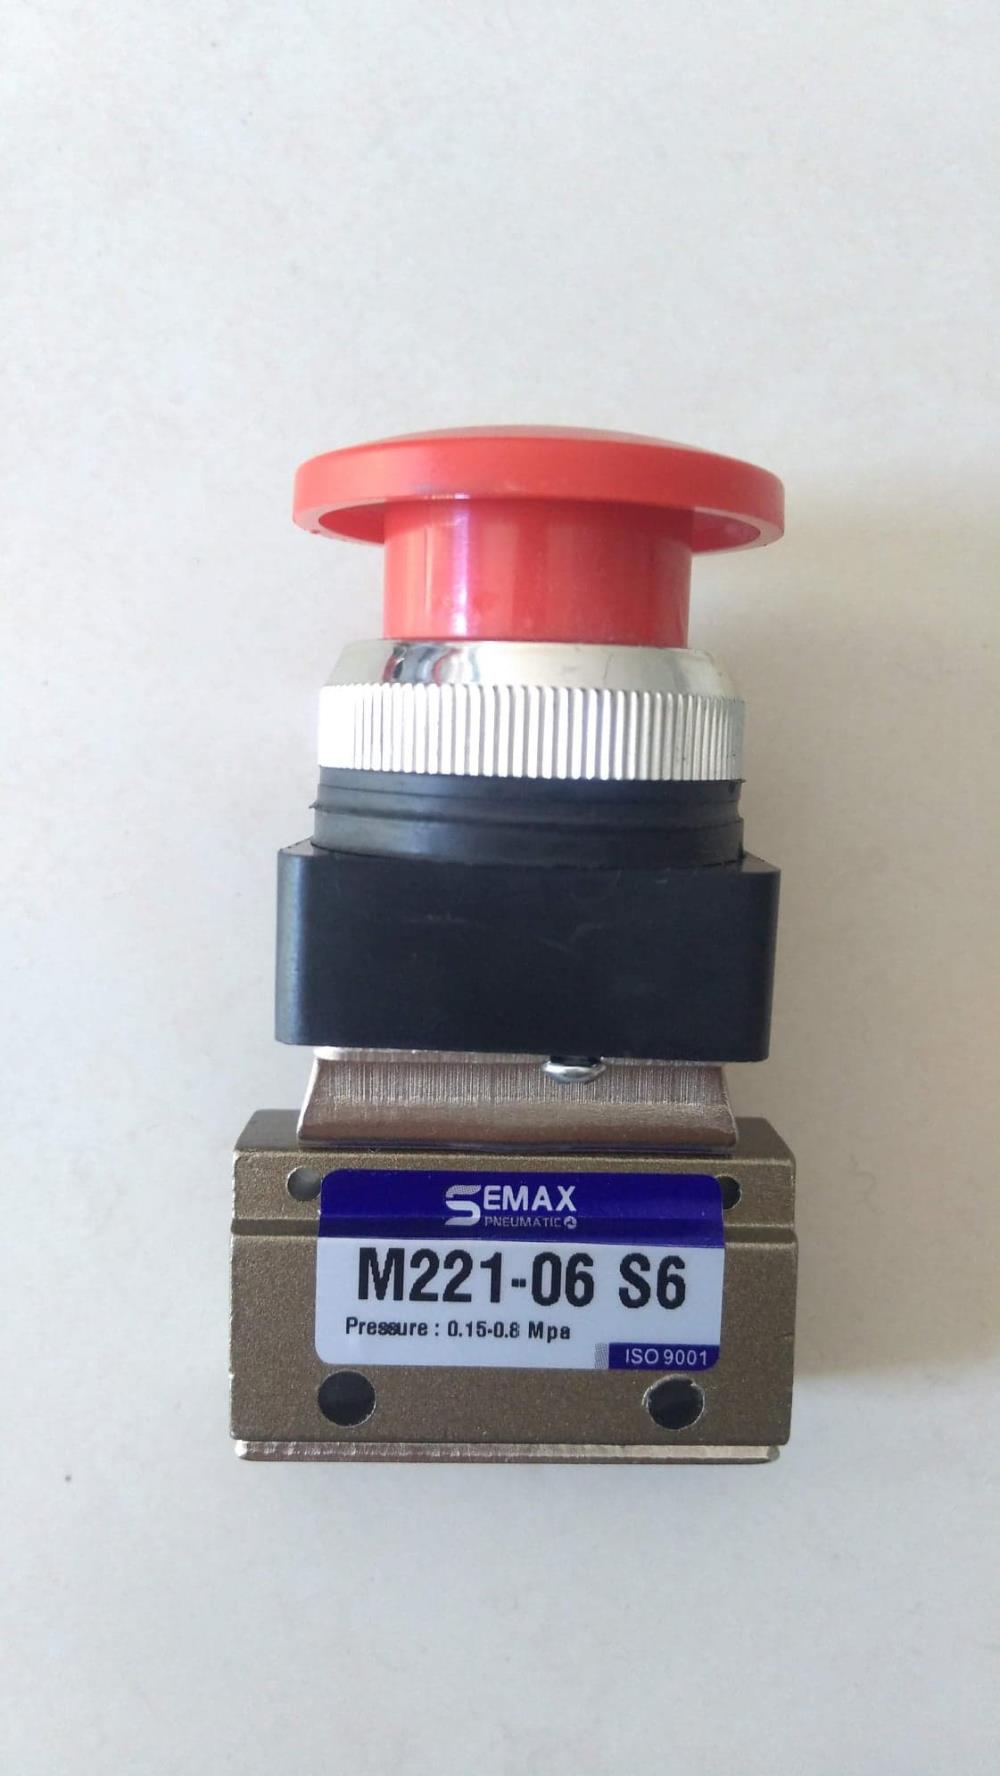 M221-S6 RED รูปดอกเห็ด หัวสีแดง Mechanicle valve 2/2 วาล์สปุ่มกด Size 1/8" แบบ Non-Lock Pressure 0-10 bar ส่งฟรีทั่วประเทศ,M221-S6 RED รูปดอกเห็ด หัวสีแดง Mechanicle valve 2/2 วาล์สปุ่มกด Size 1/8" แบบ Non-Lock,M221-S6 RED รูปดอกเห็ด หัวสีแดง Mechanicle valve 2/2 วาล์สปุ่มกด Size 1/8" แบบ Non-Lock pressure 10bar 150psi,Solenoid valve Taiwan,Pumps, Valves and Accessories/Valves/Air Valves